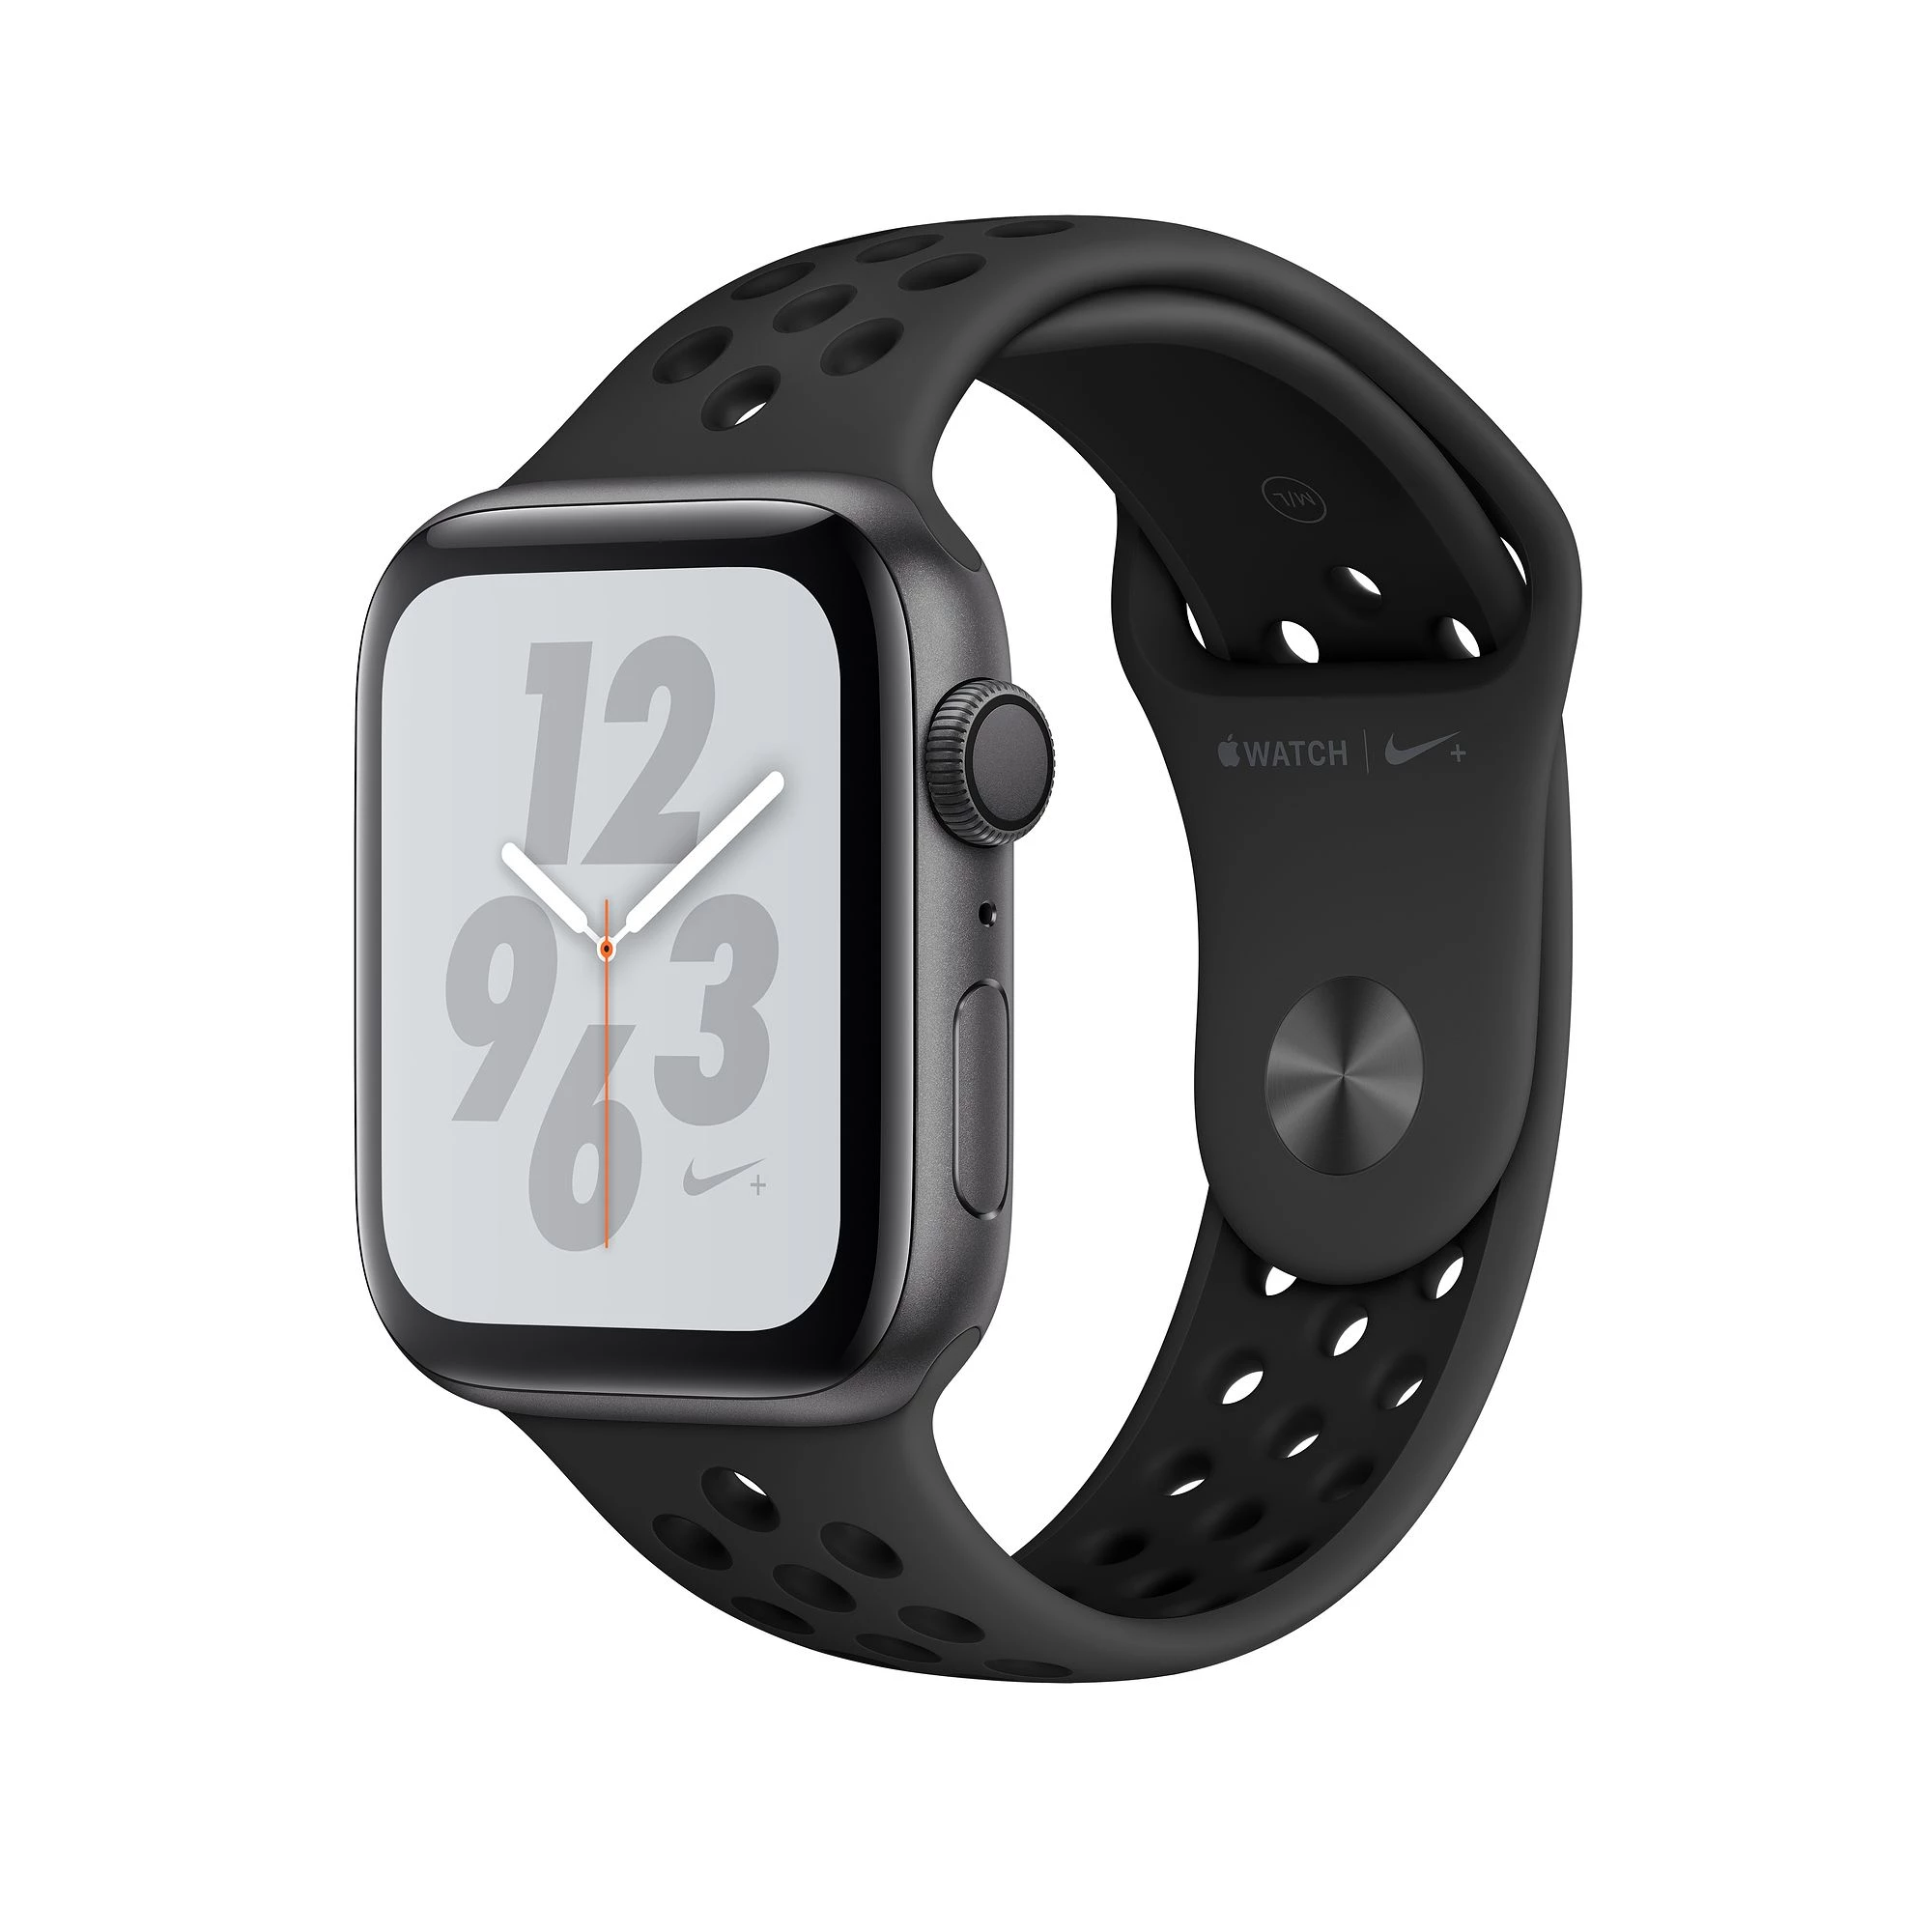 Apple Watch Series 4 Nike + (GPS) 40mm Space Gray Aluminium Case with Anthracite / Black Nike Sport Band (MU6J2)